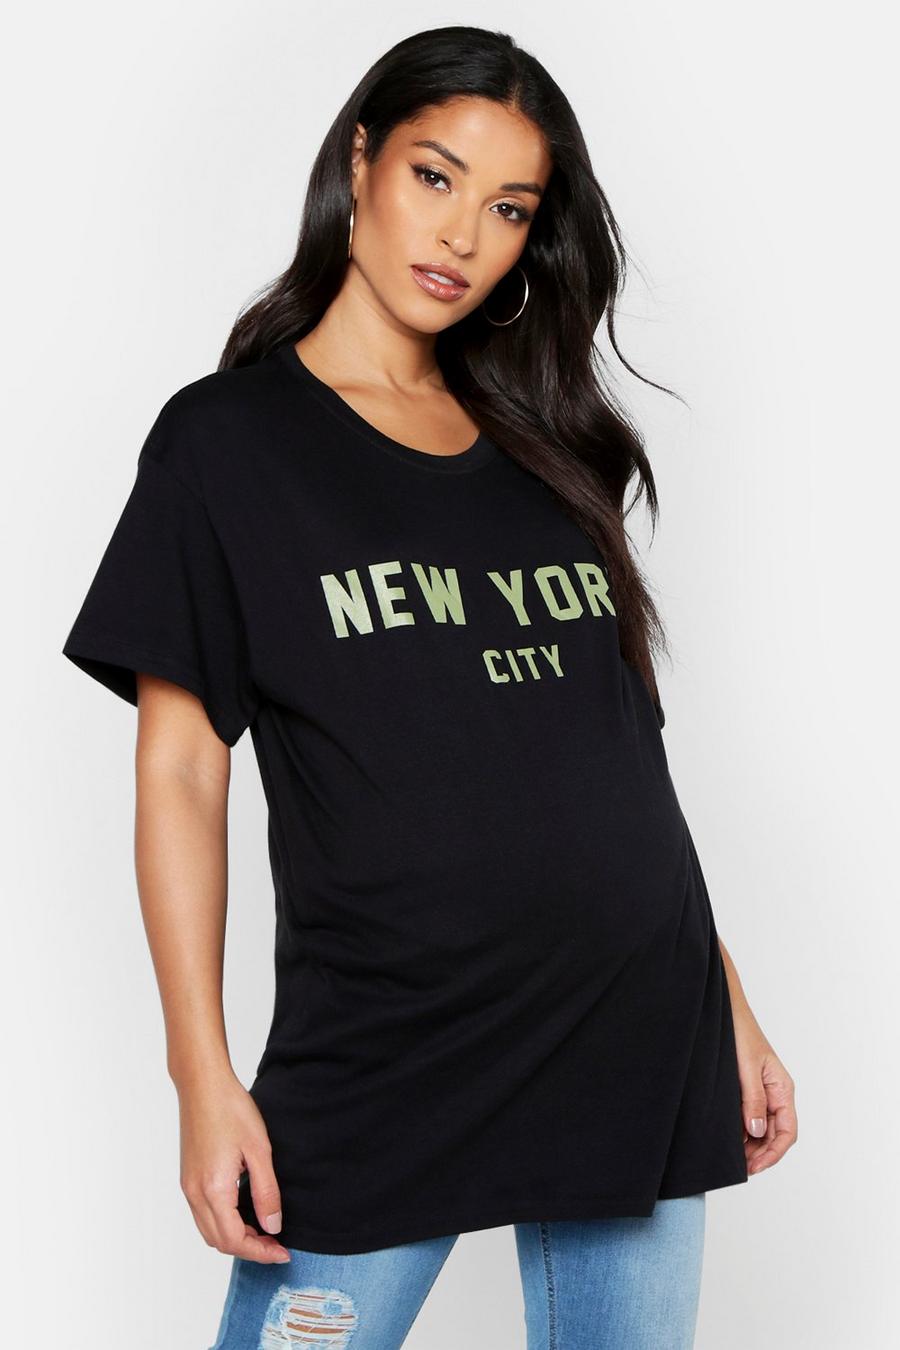 Camiseta con eslogan "New York City" premamá image number 1